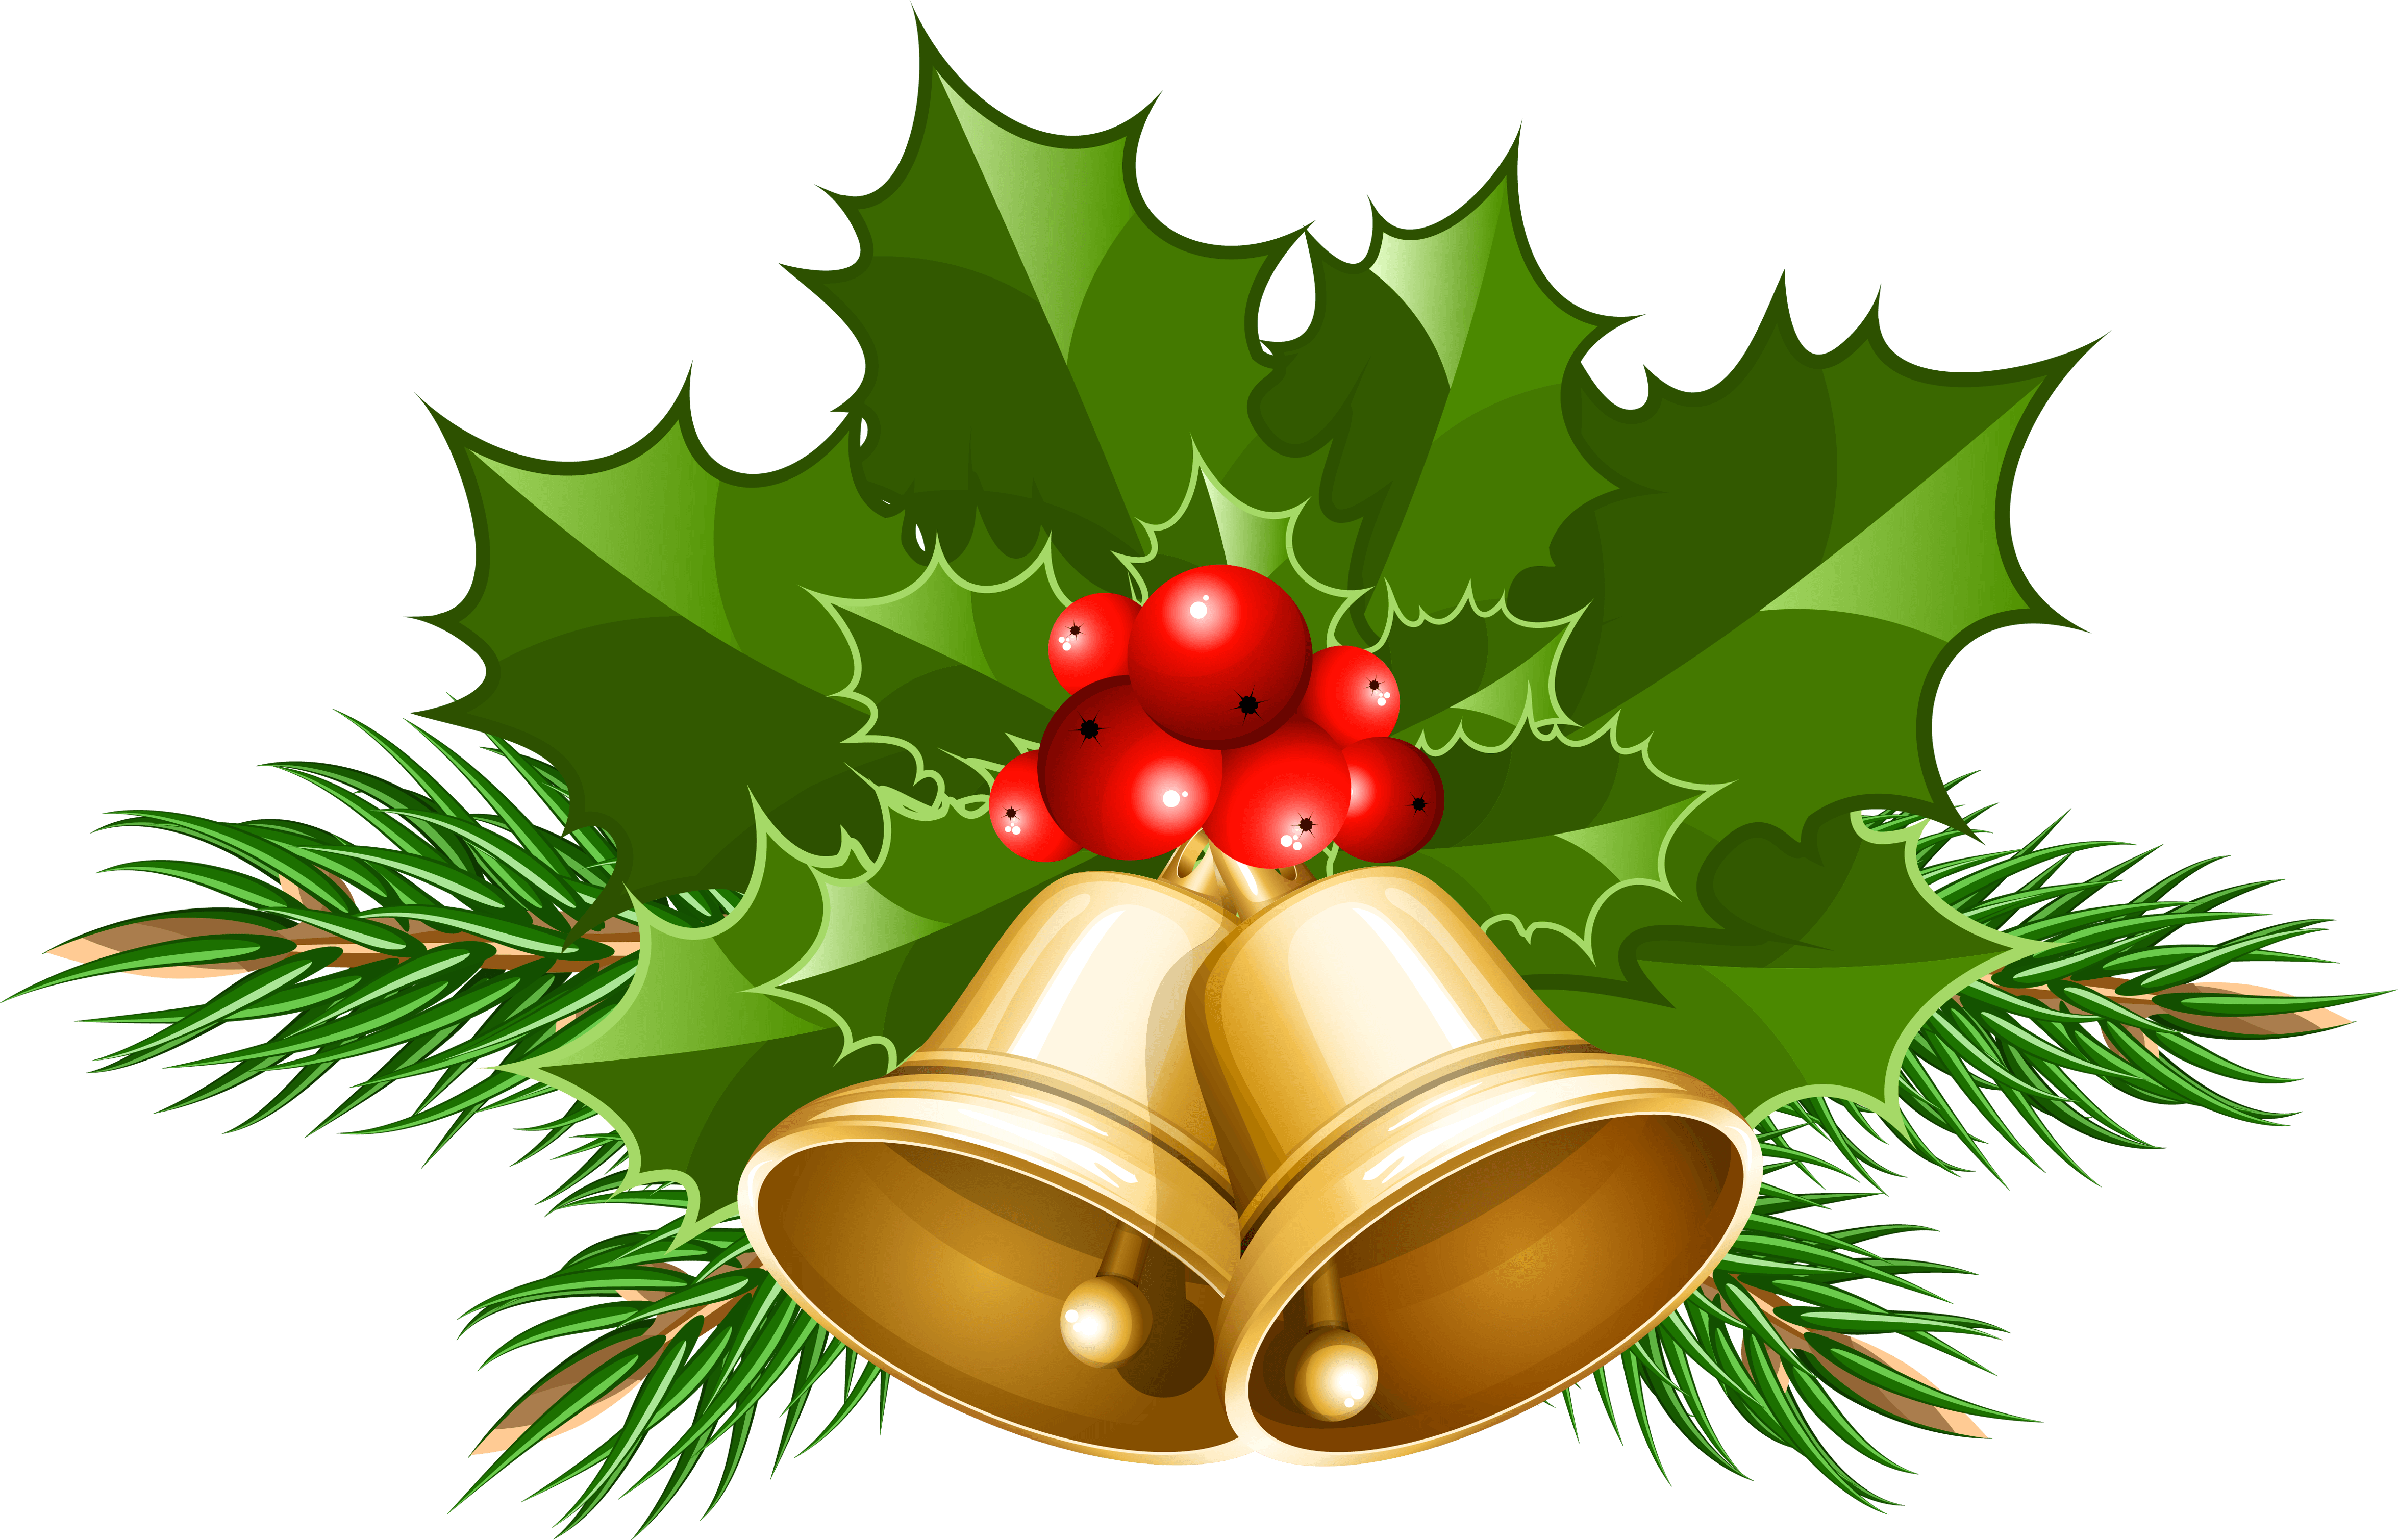 Free Christmas Mistletoe Cliparts, Download Free Clip Art.